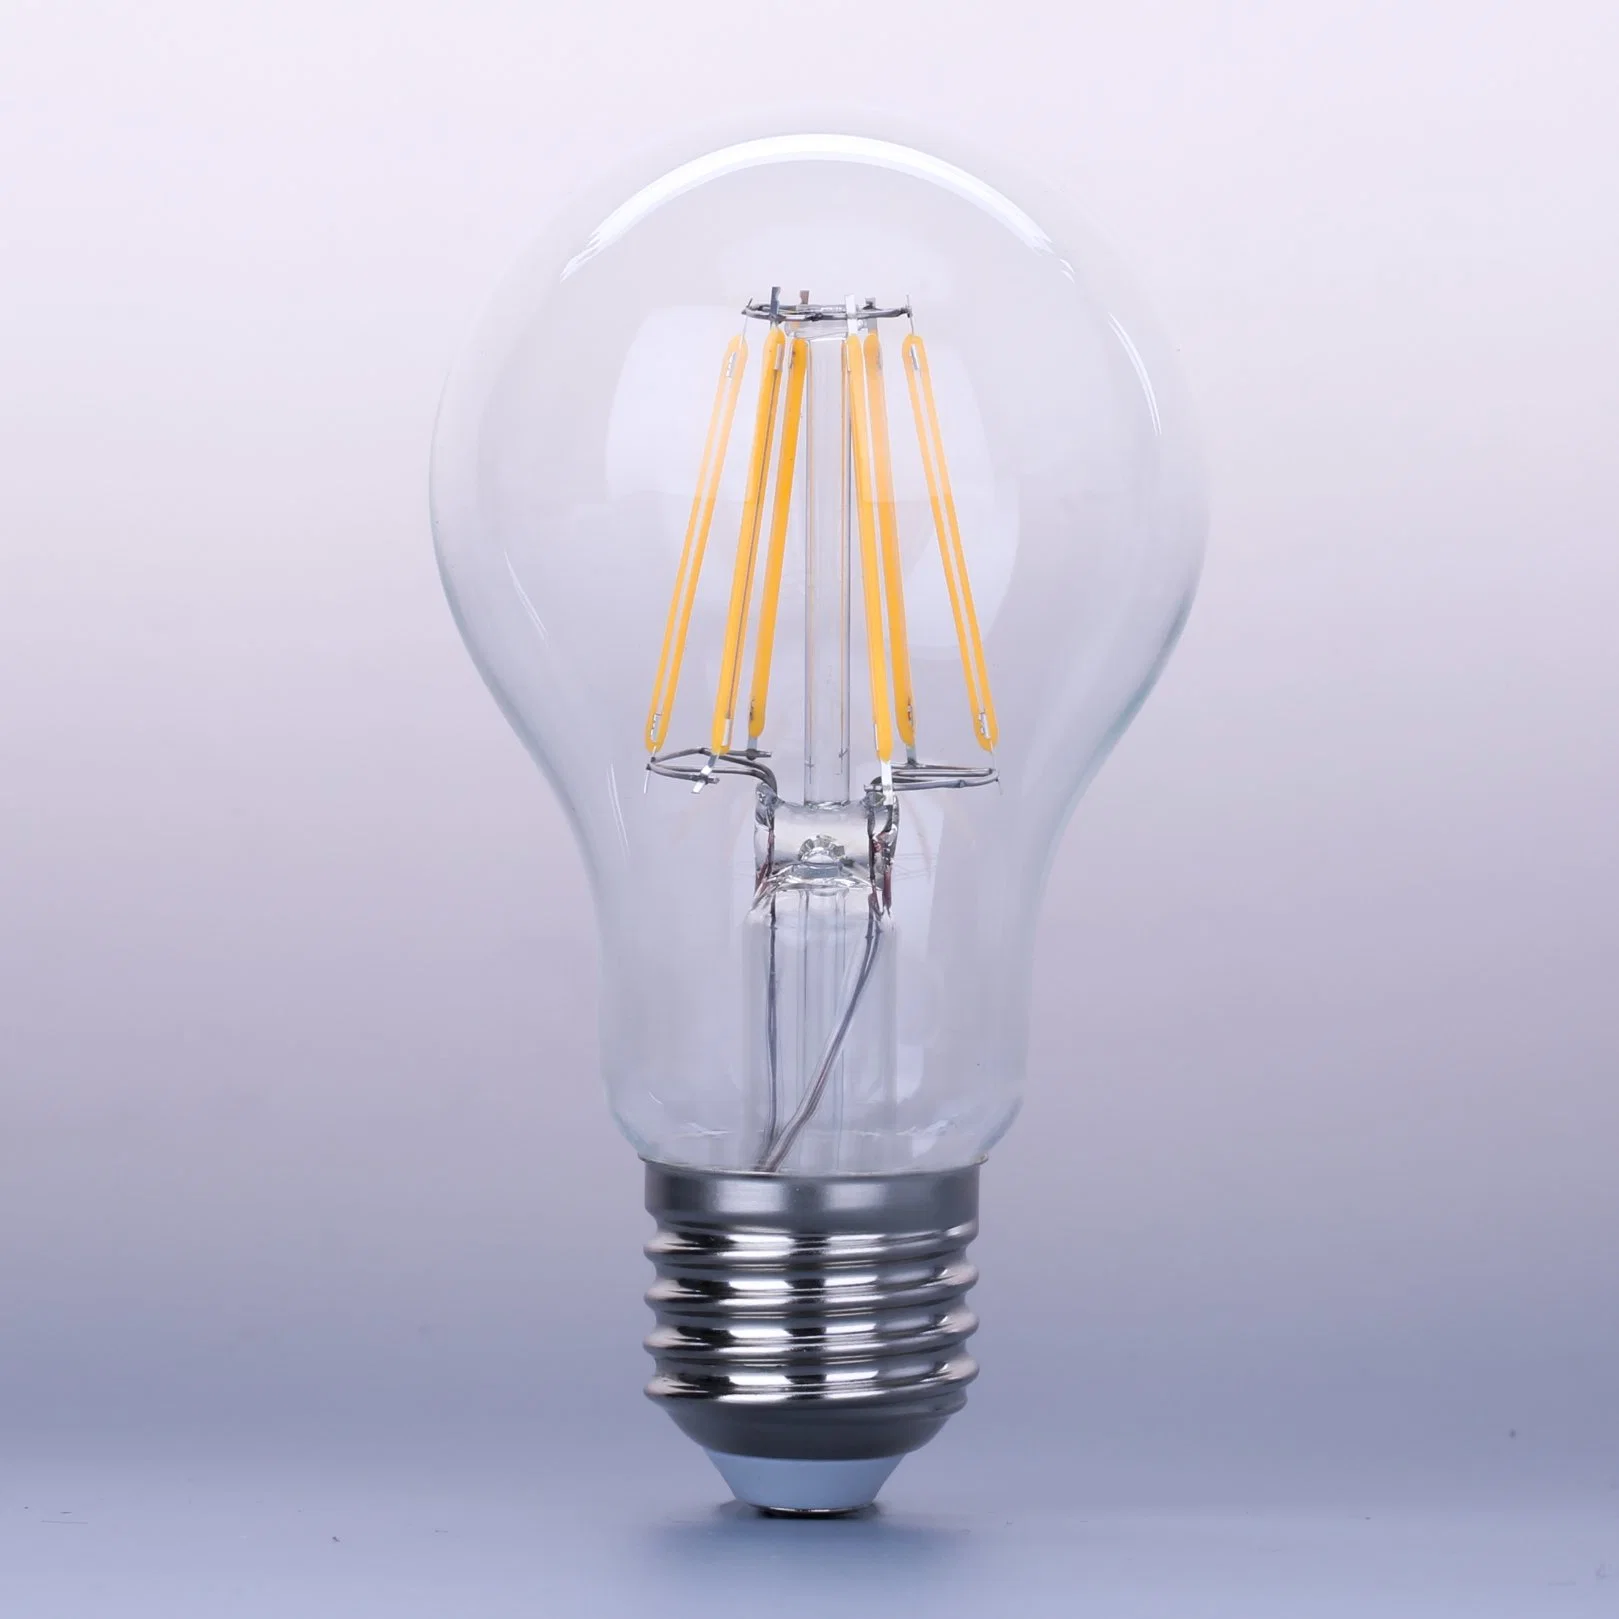 LED Filament Bulb Light E27 E14 with Colour Box